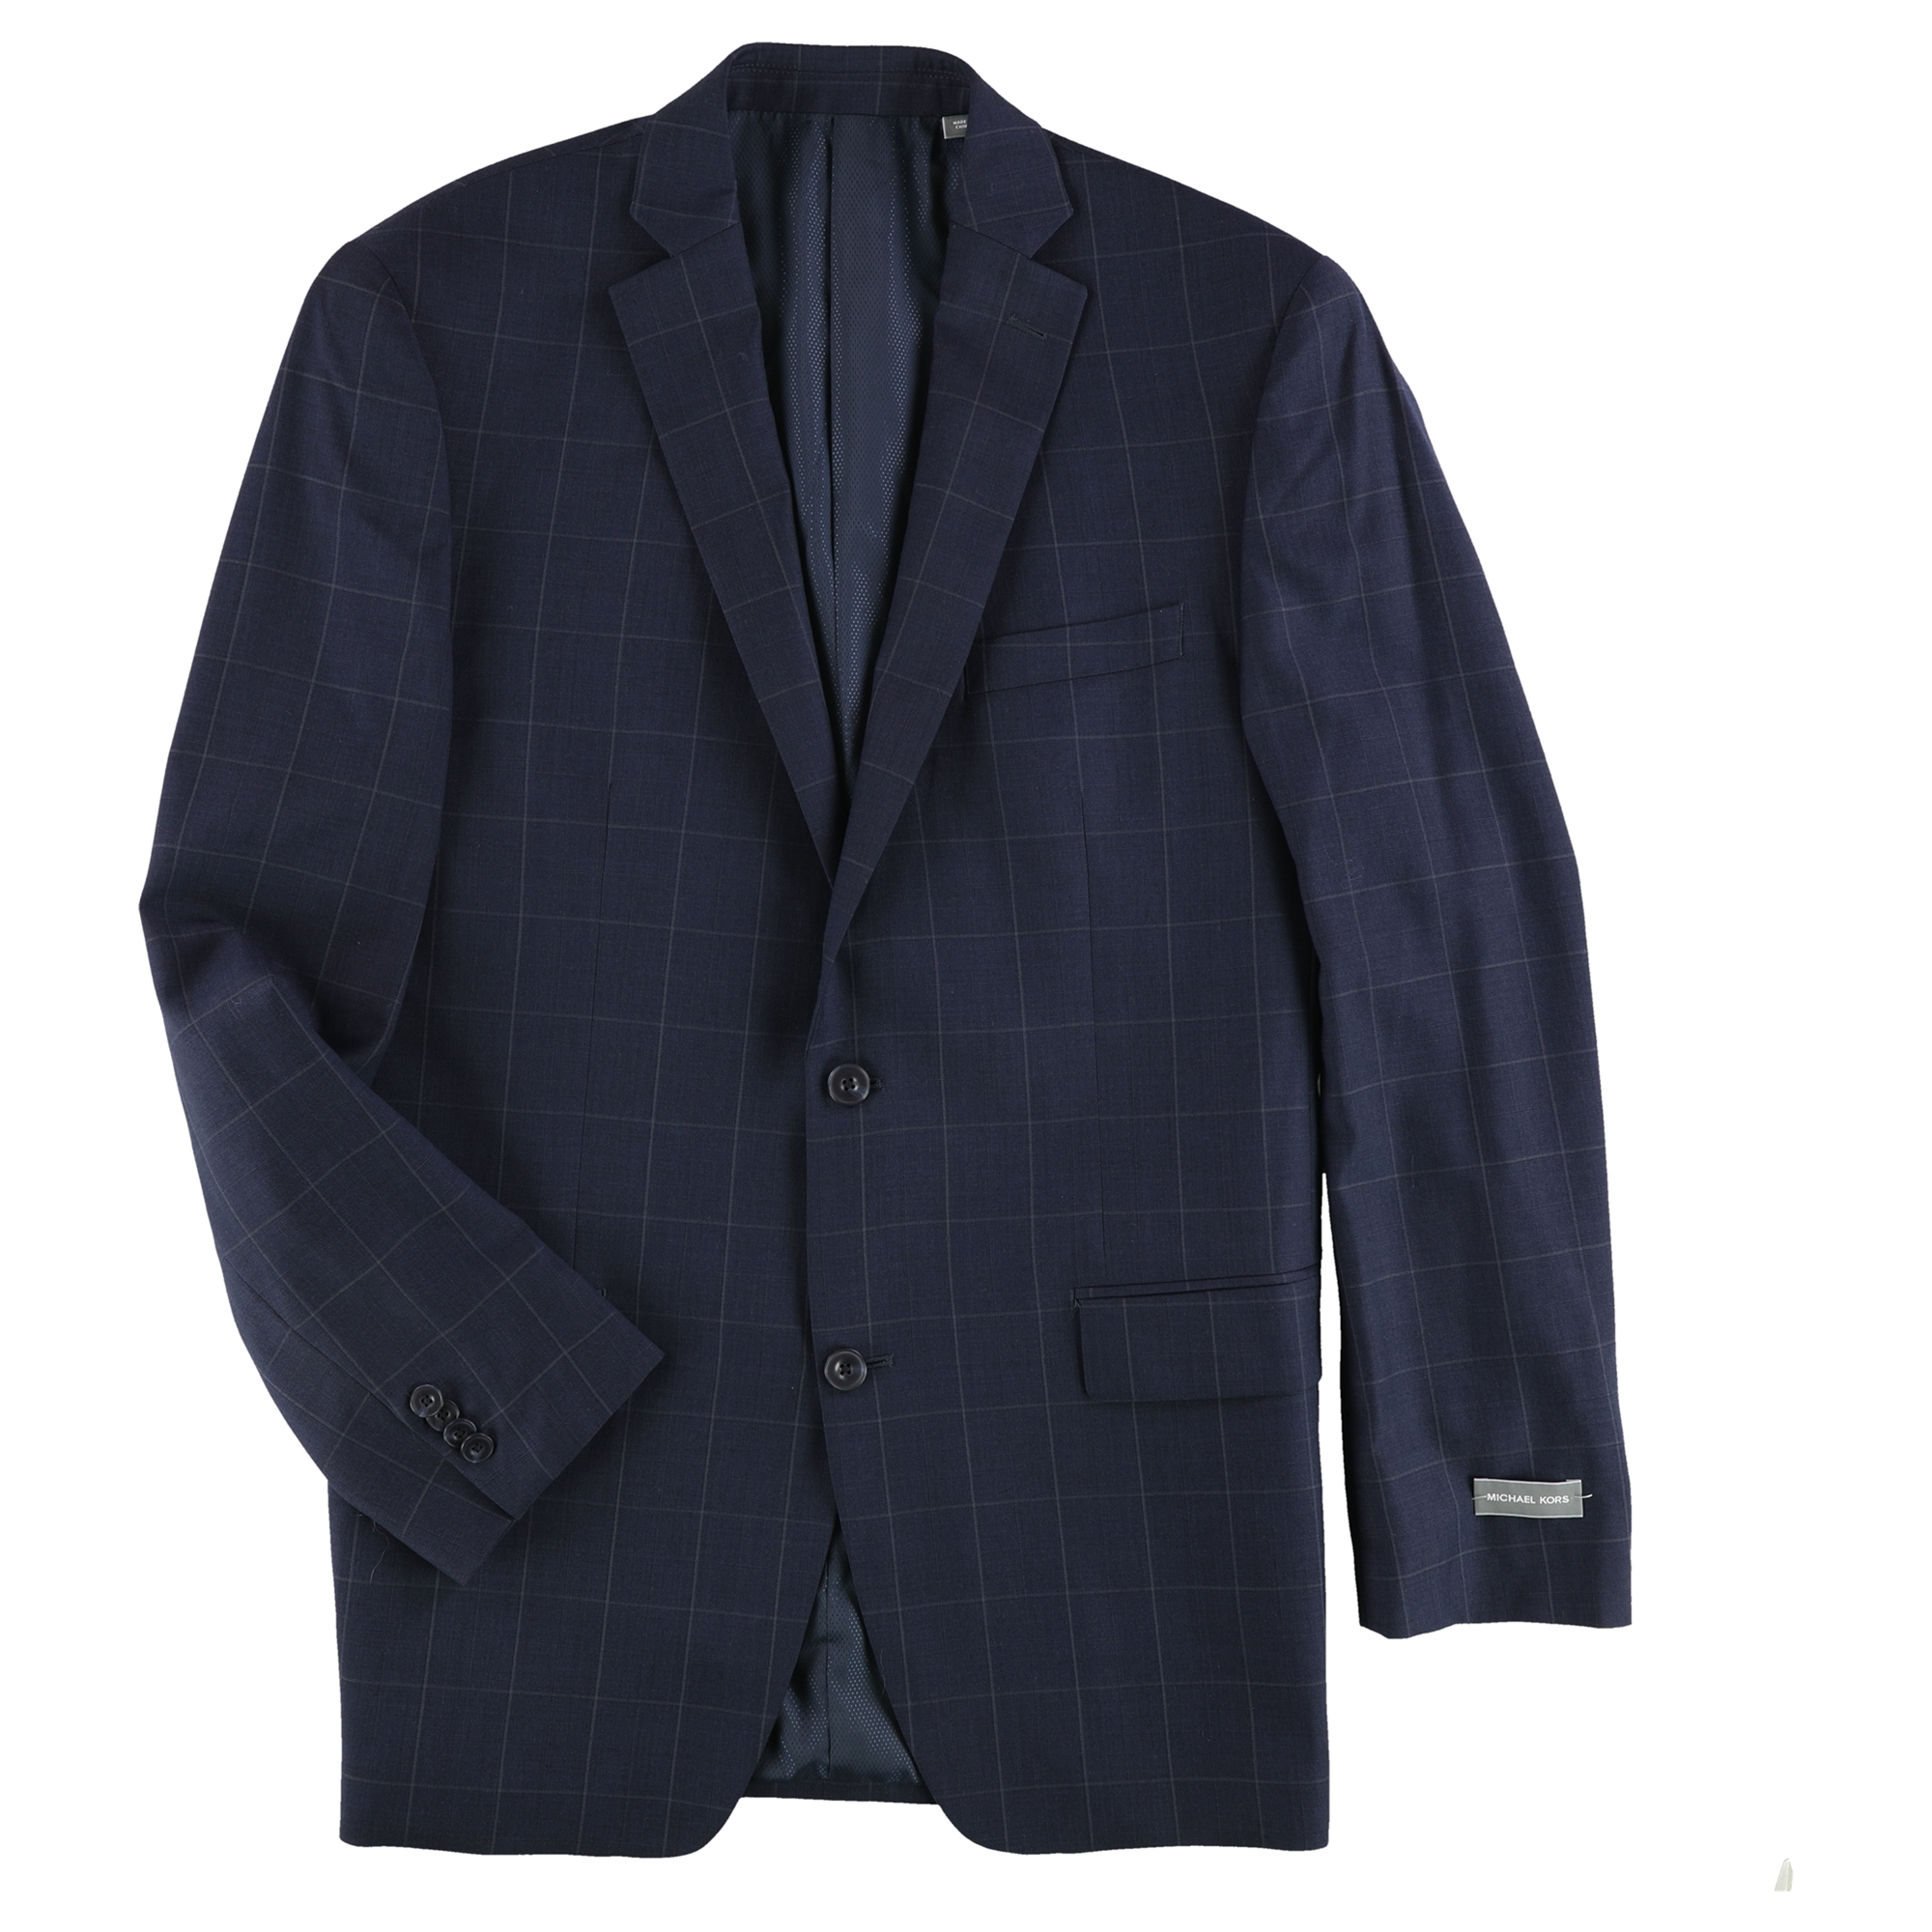 ULTRA SLIM BLUE PERFORMANCE WEDDING SUIT  AJs Formalwear and Tuxedo Rental